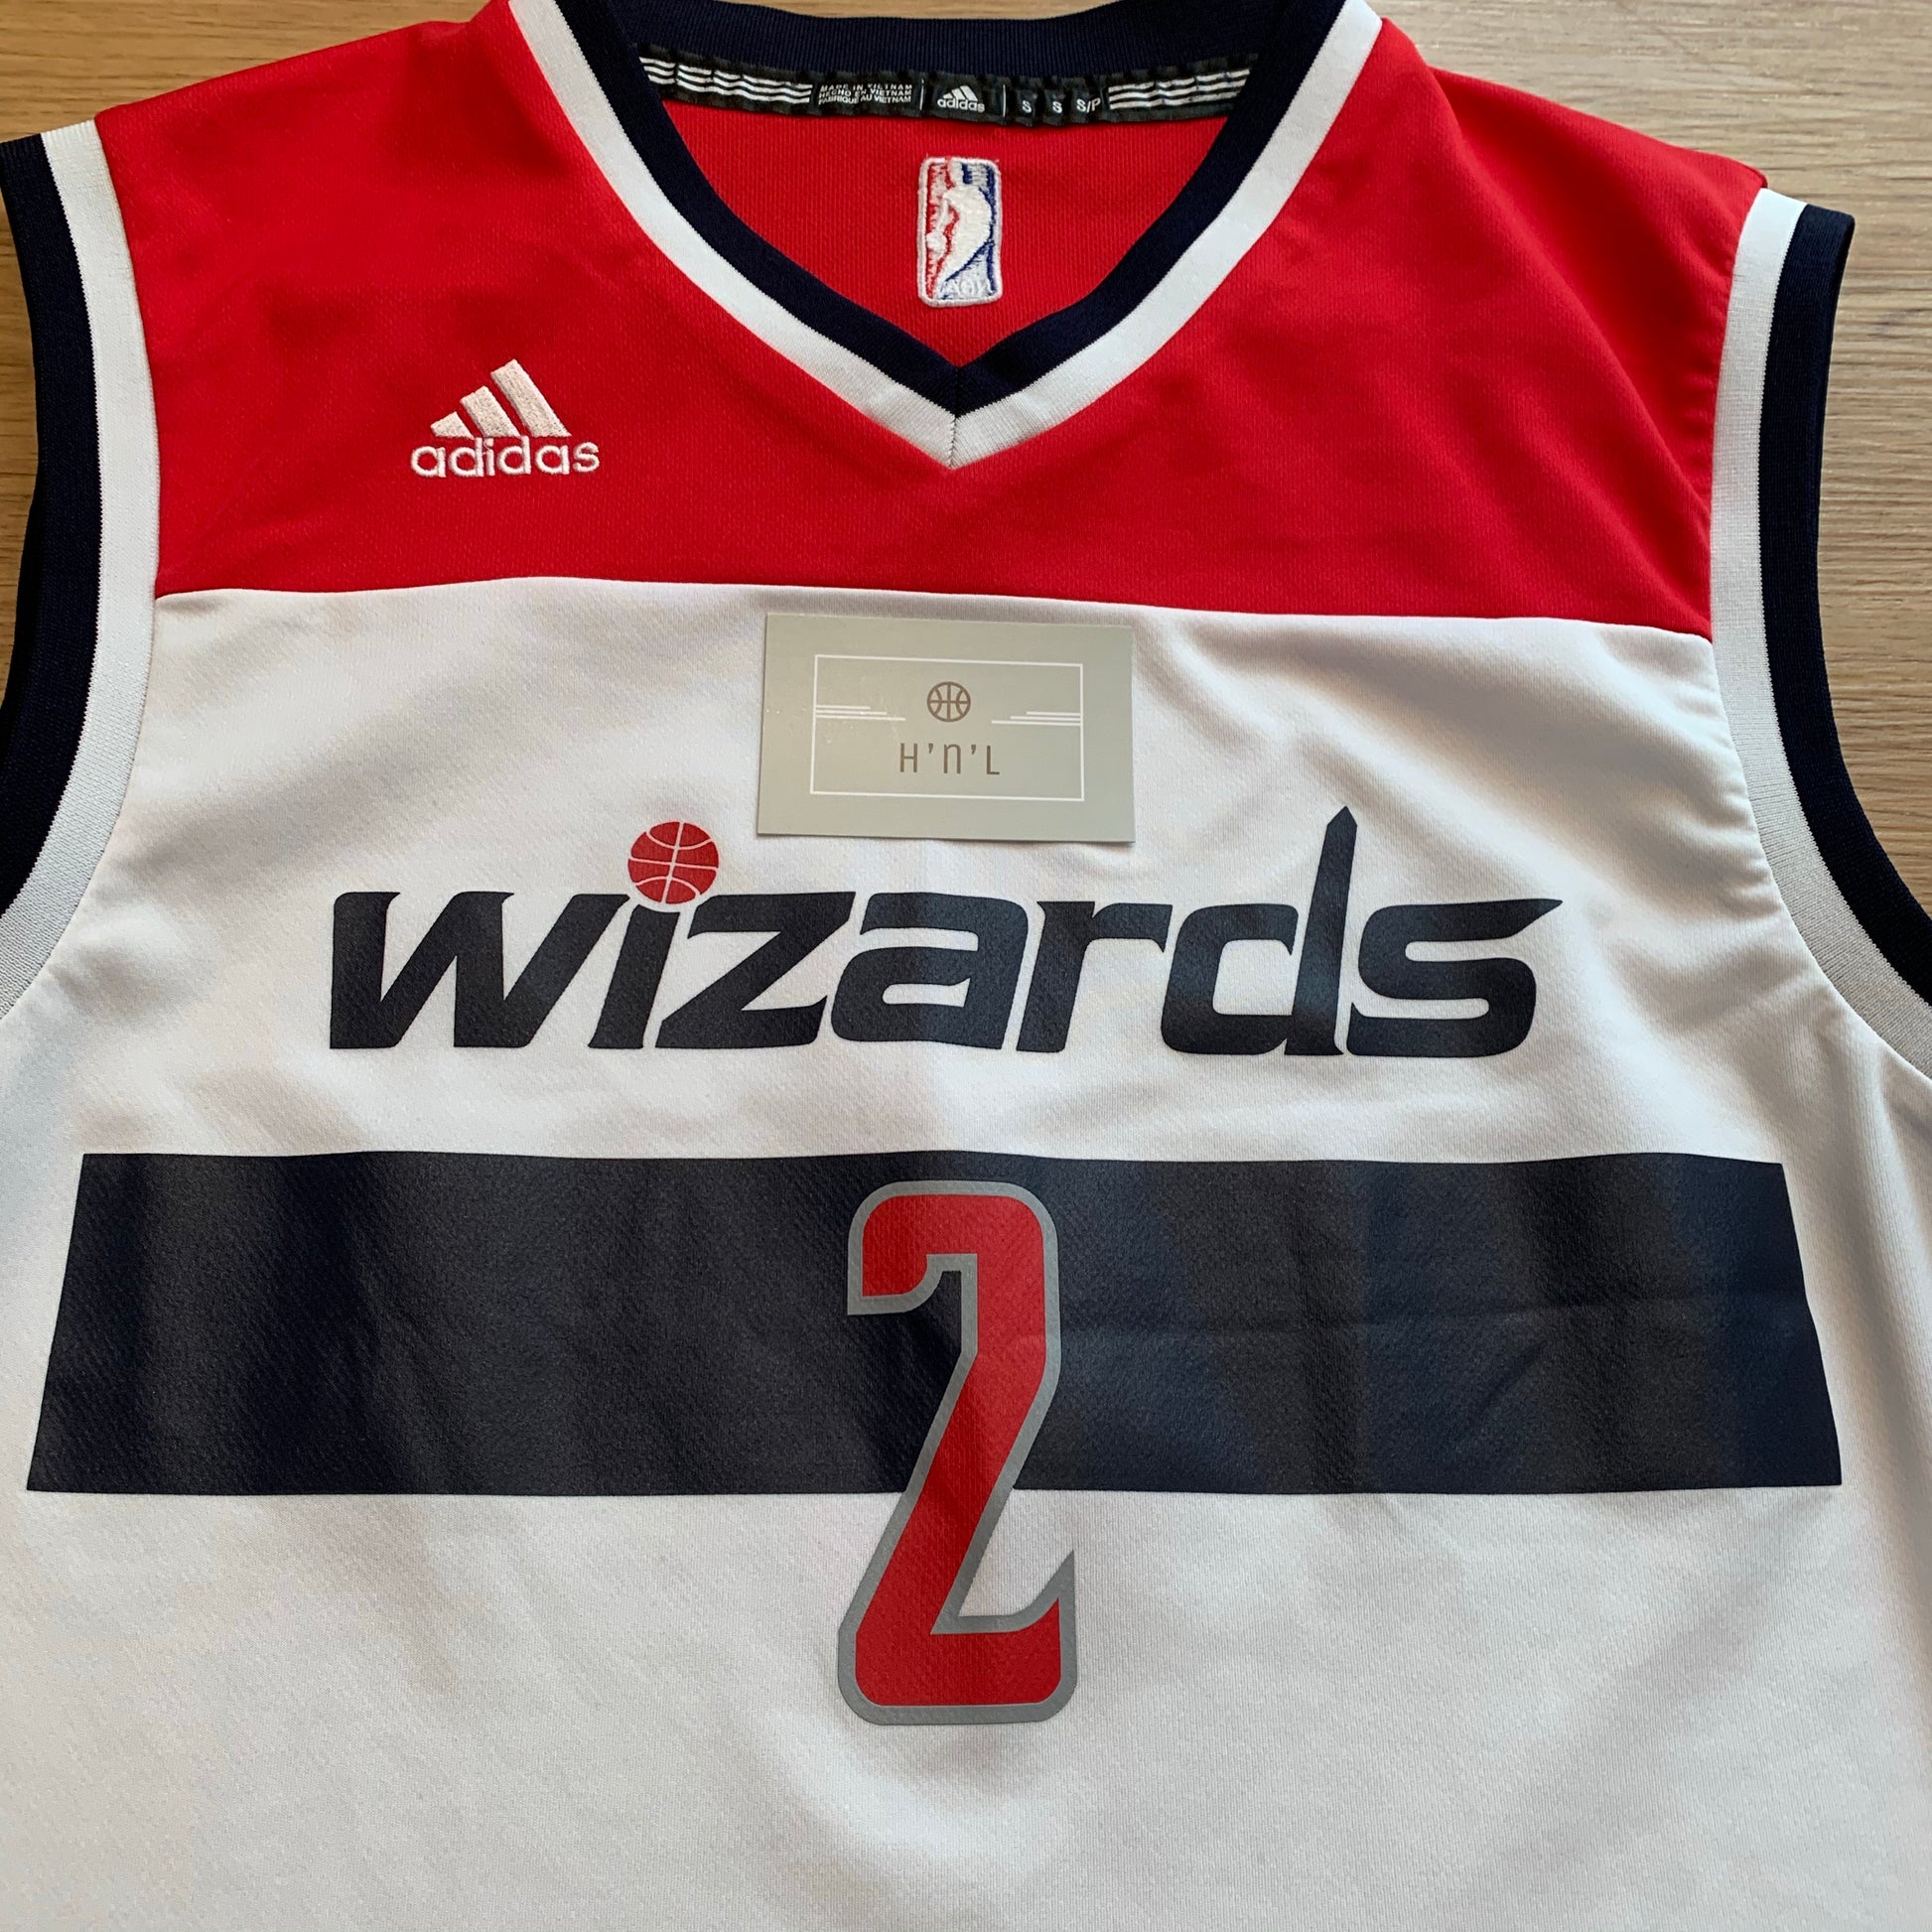 John Wall #2 Washington Wizards Adidas NBA Jersey Men's Size